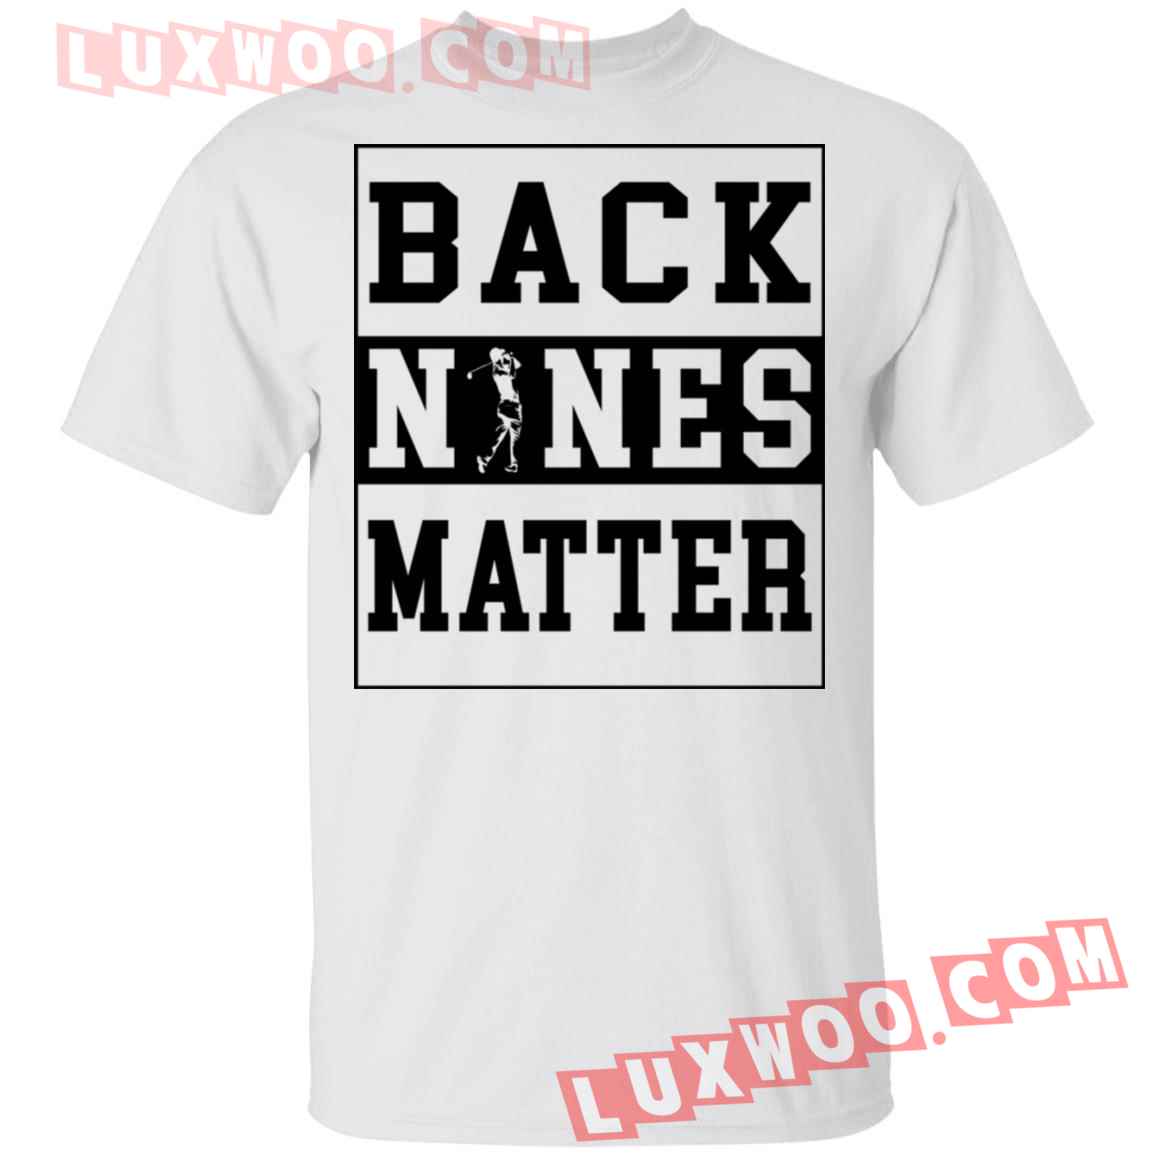 Black Nines Matter Shirt